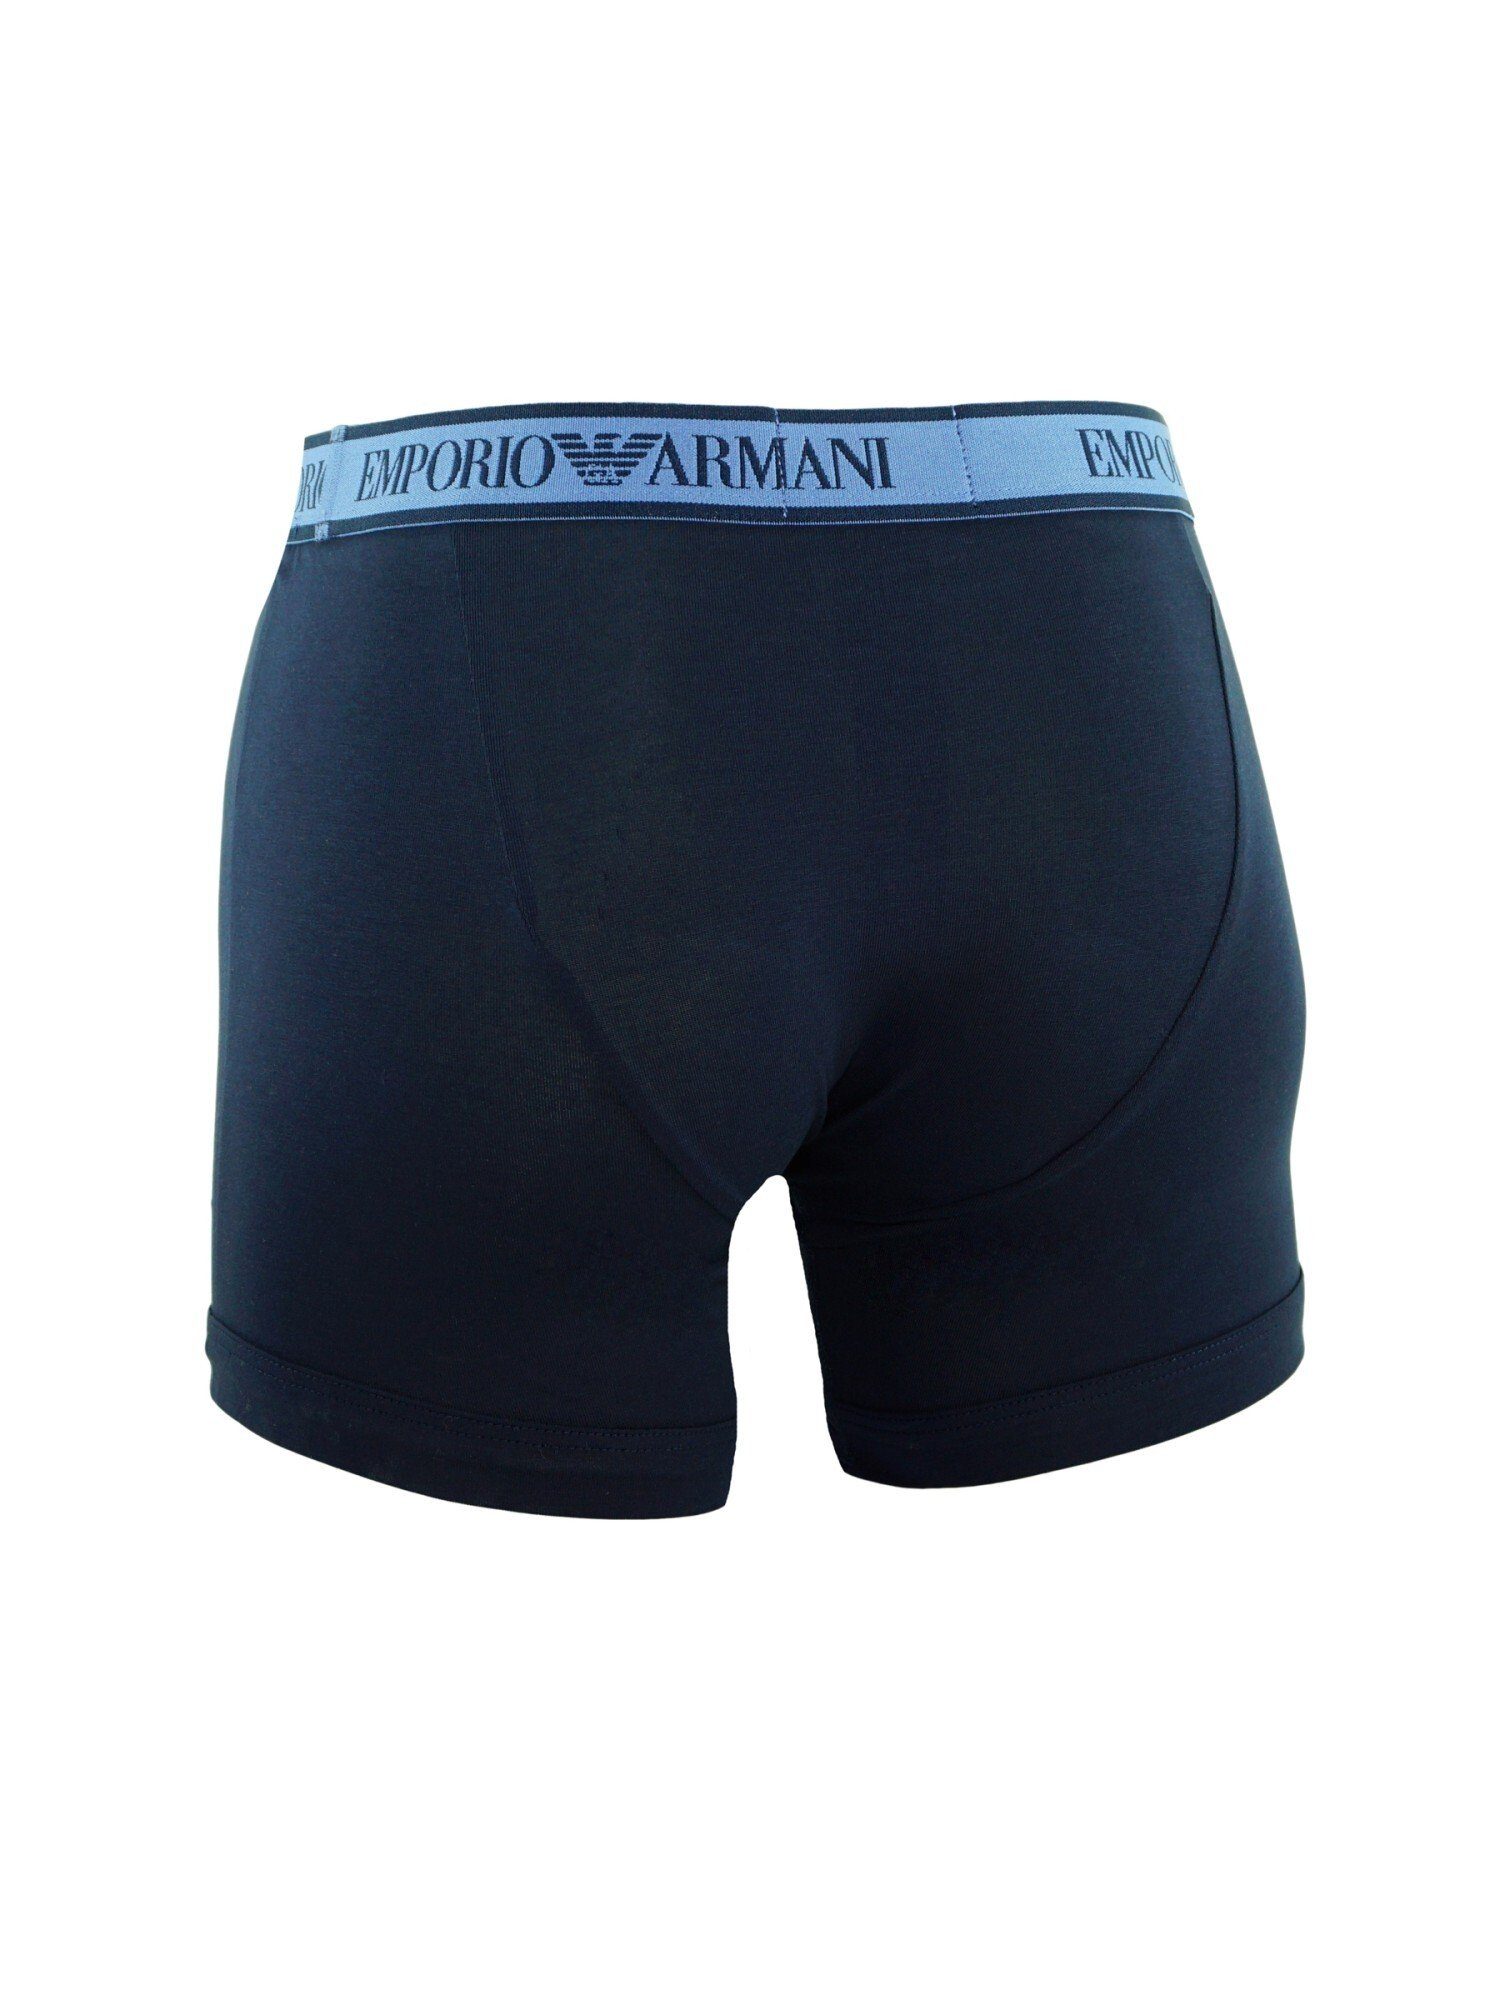 Pack (3-St) Boxer Shorts Armani Boxershorts Emporio 3 Knit